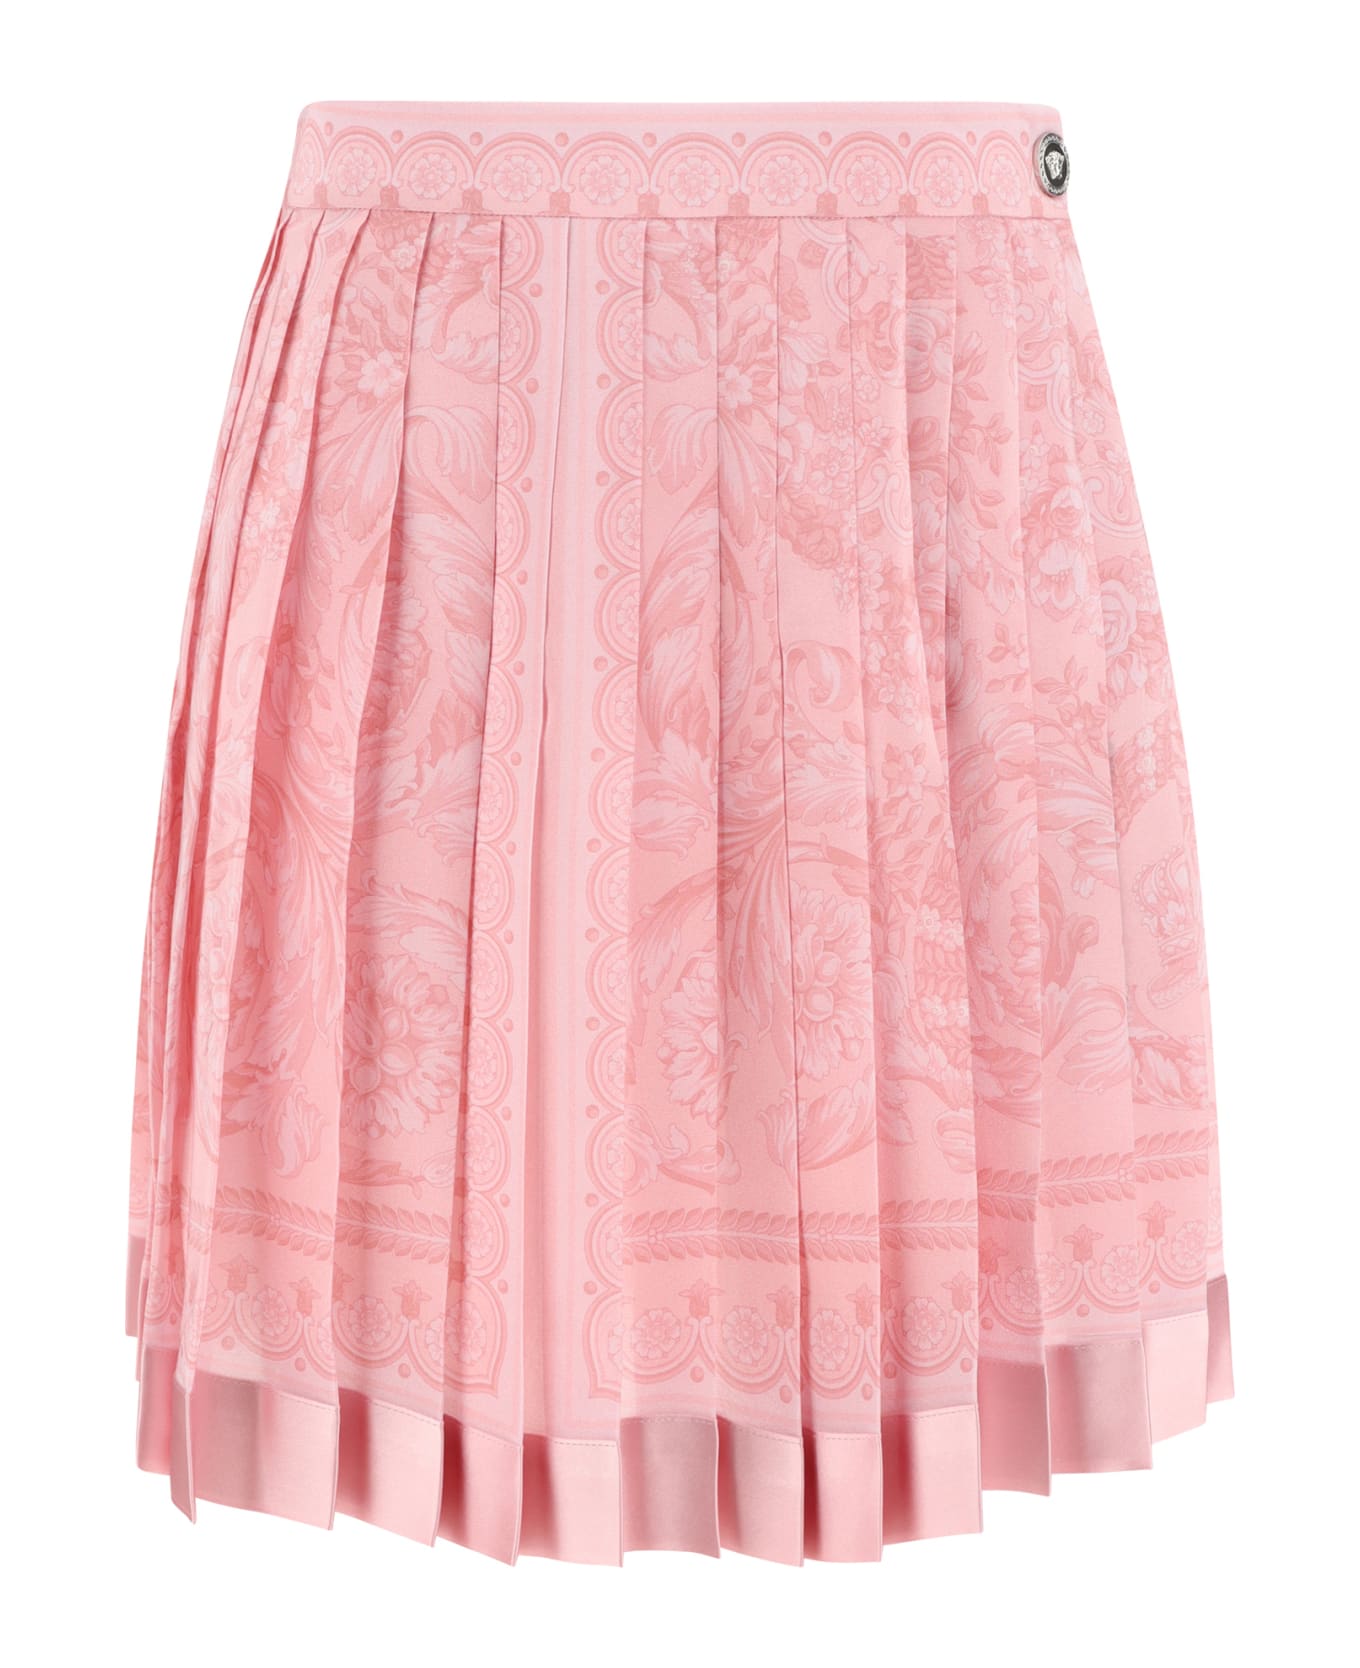 Versace Mini Skirt - Pale Pink